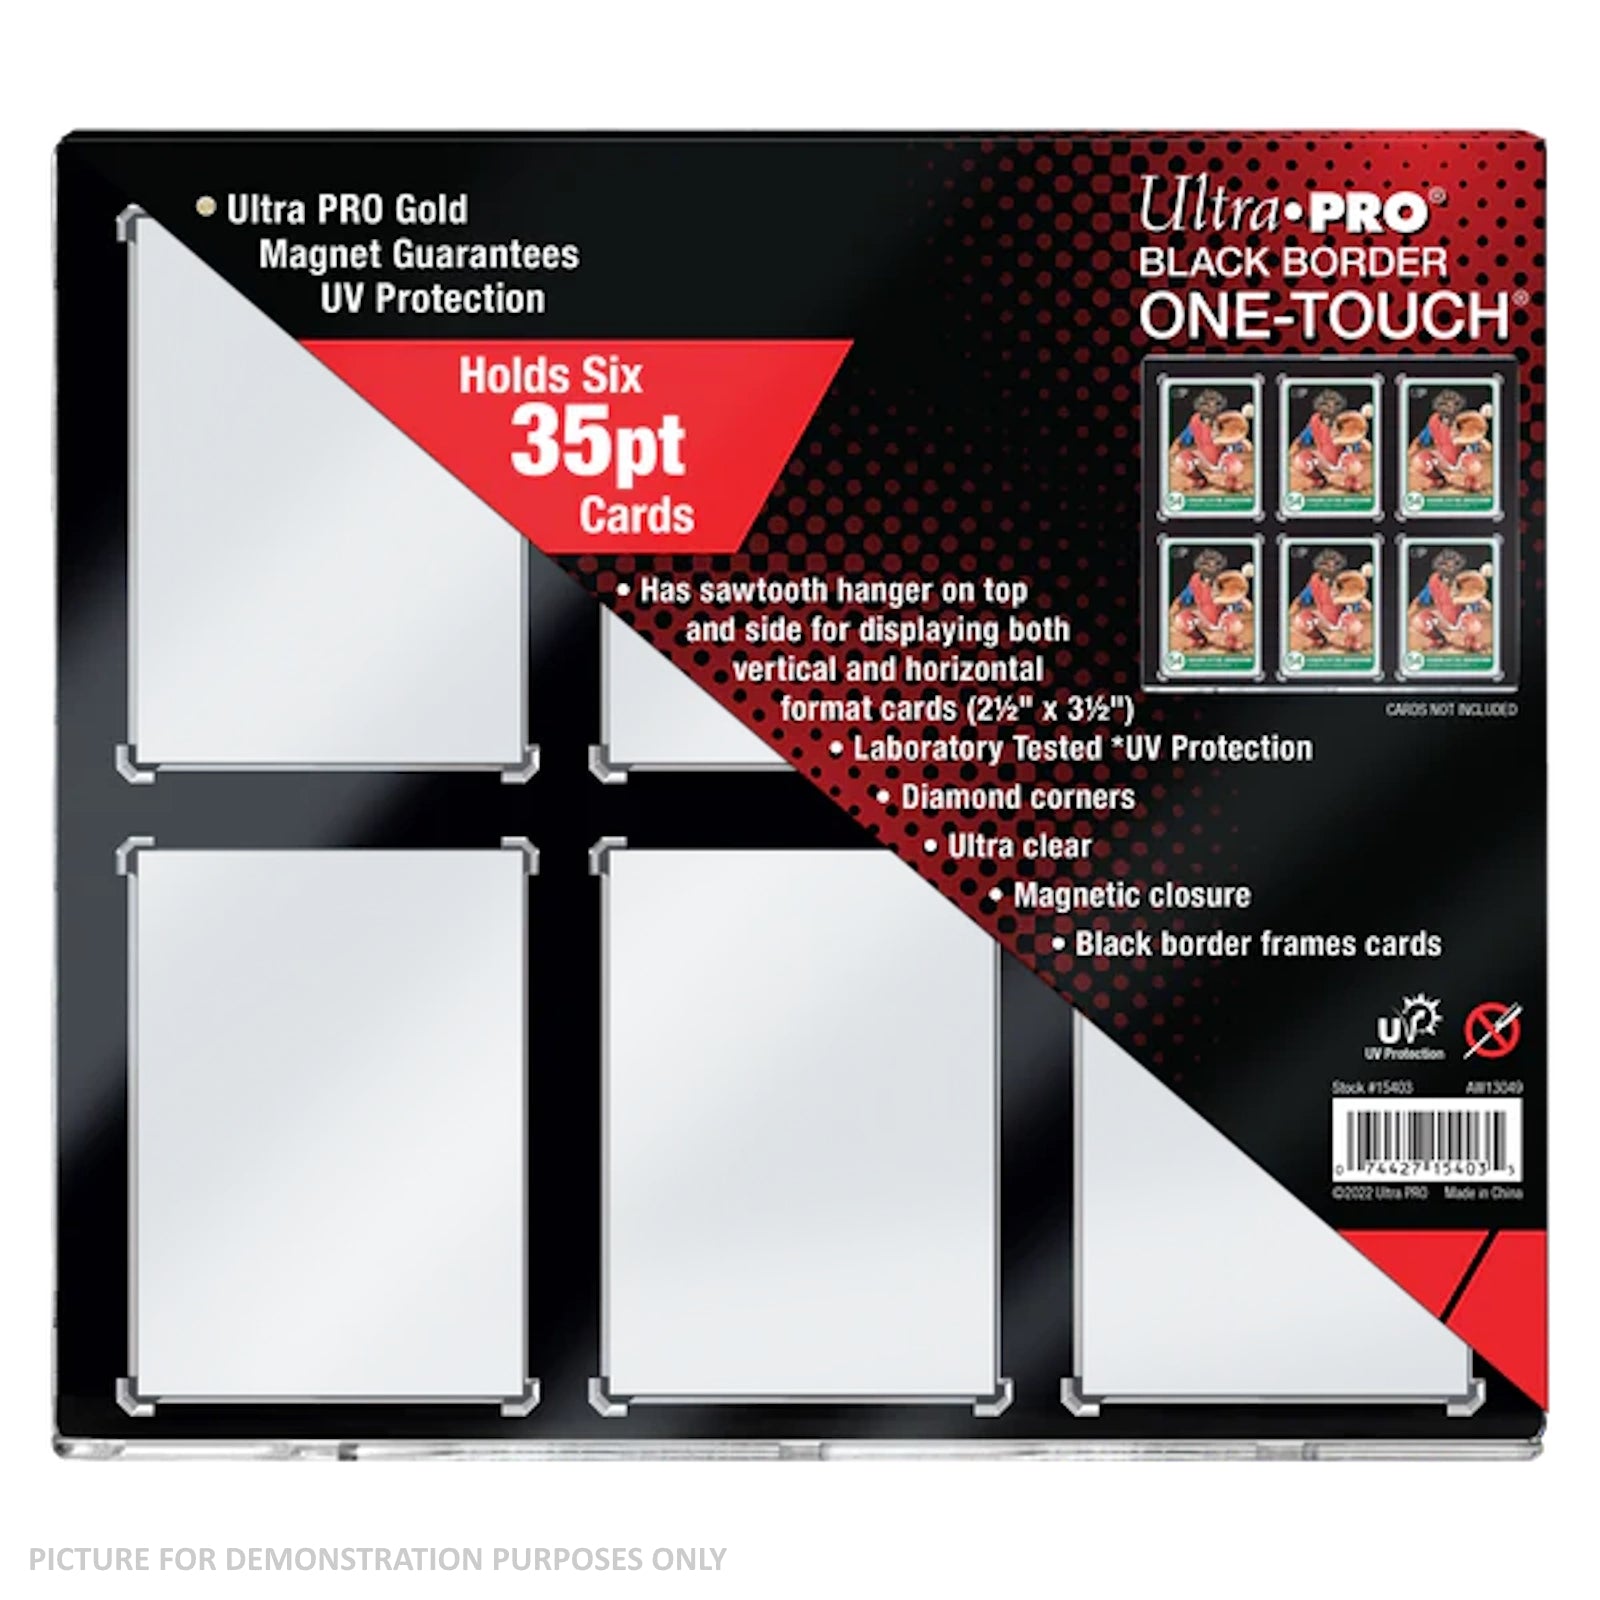 Ultra Pro One-Touch 35pt 6 Card Holder - Black Border